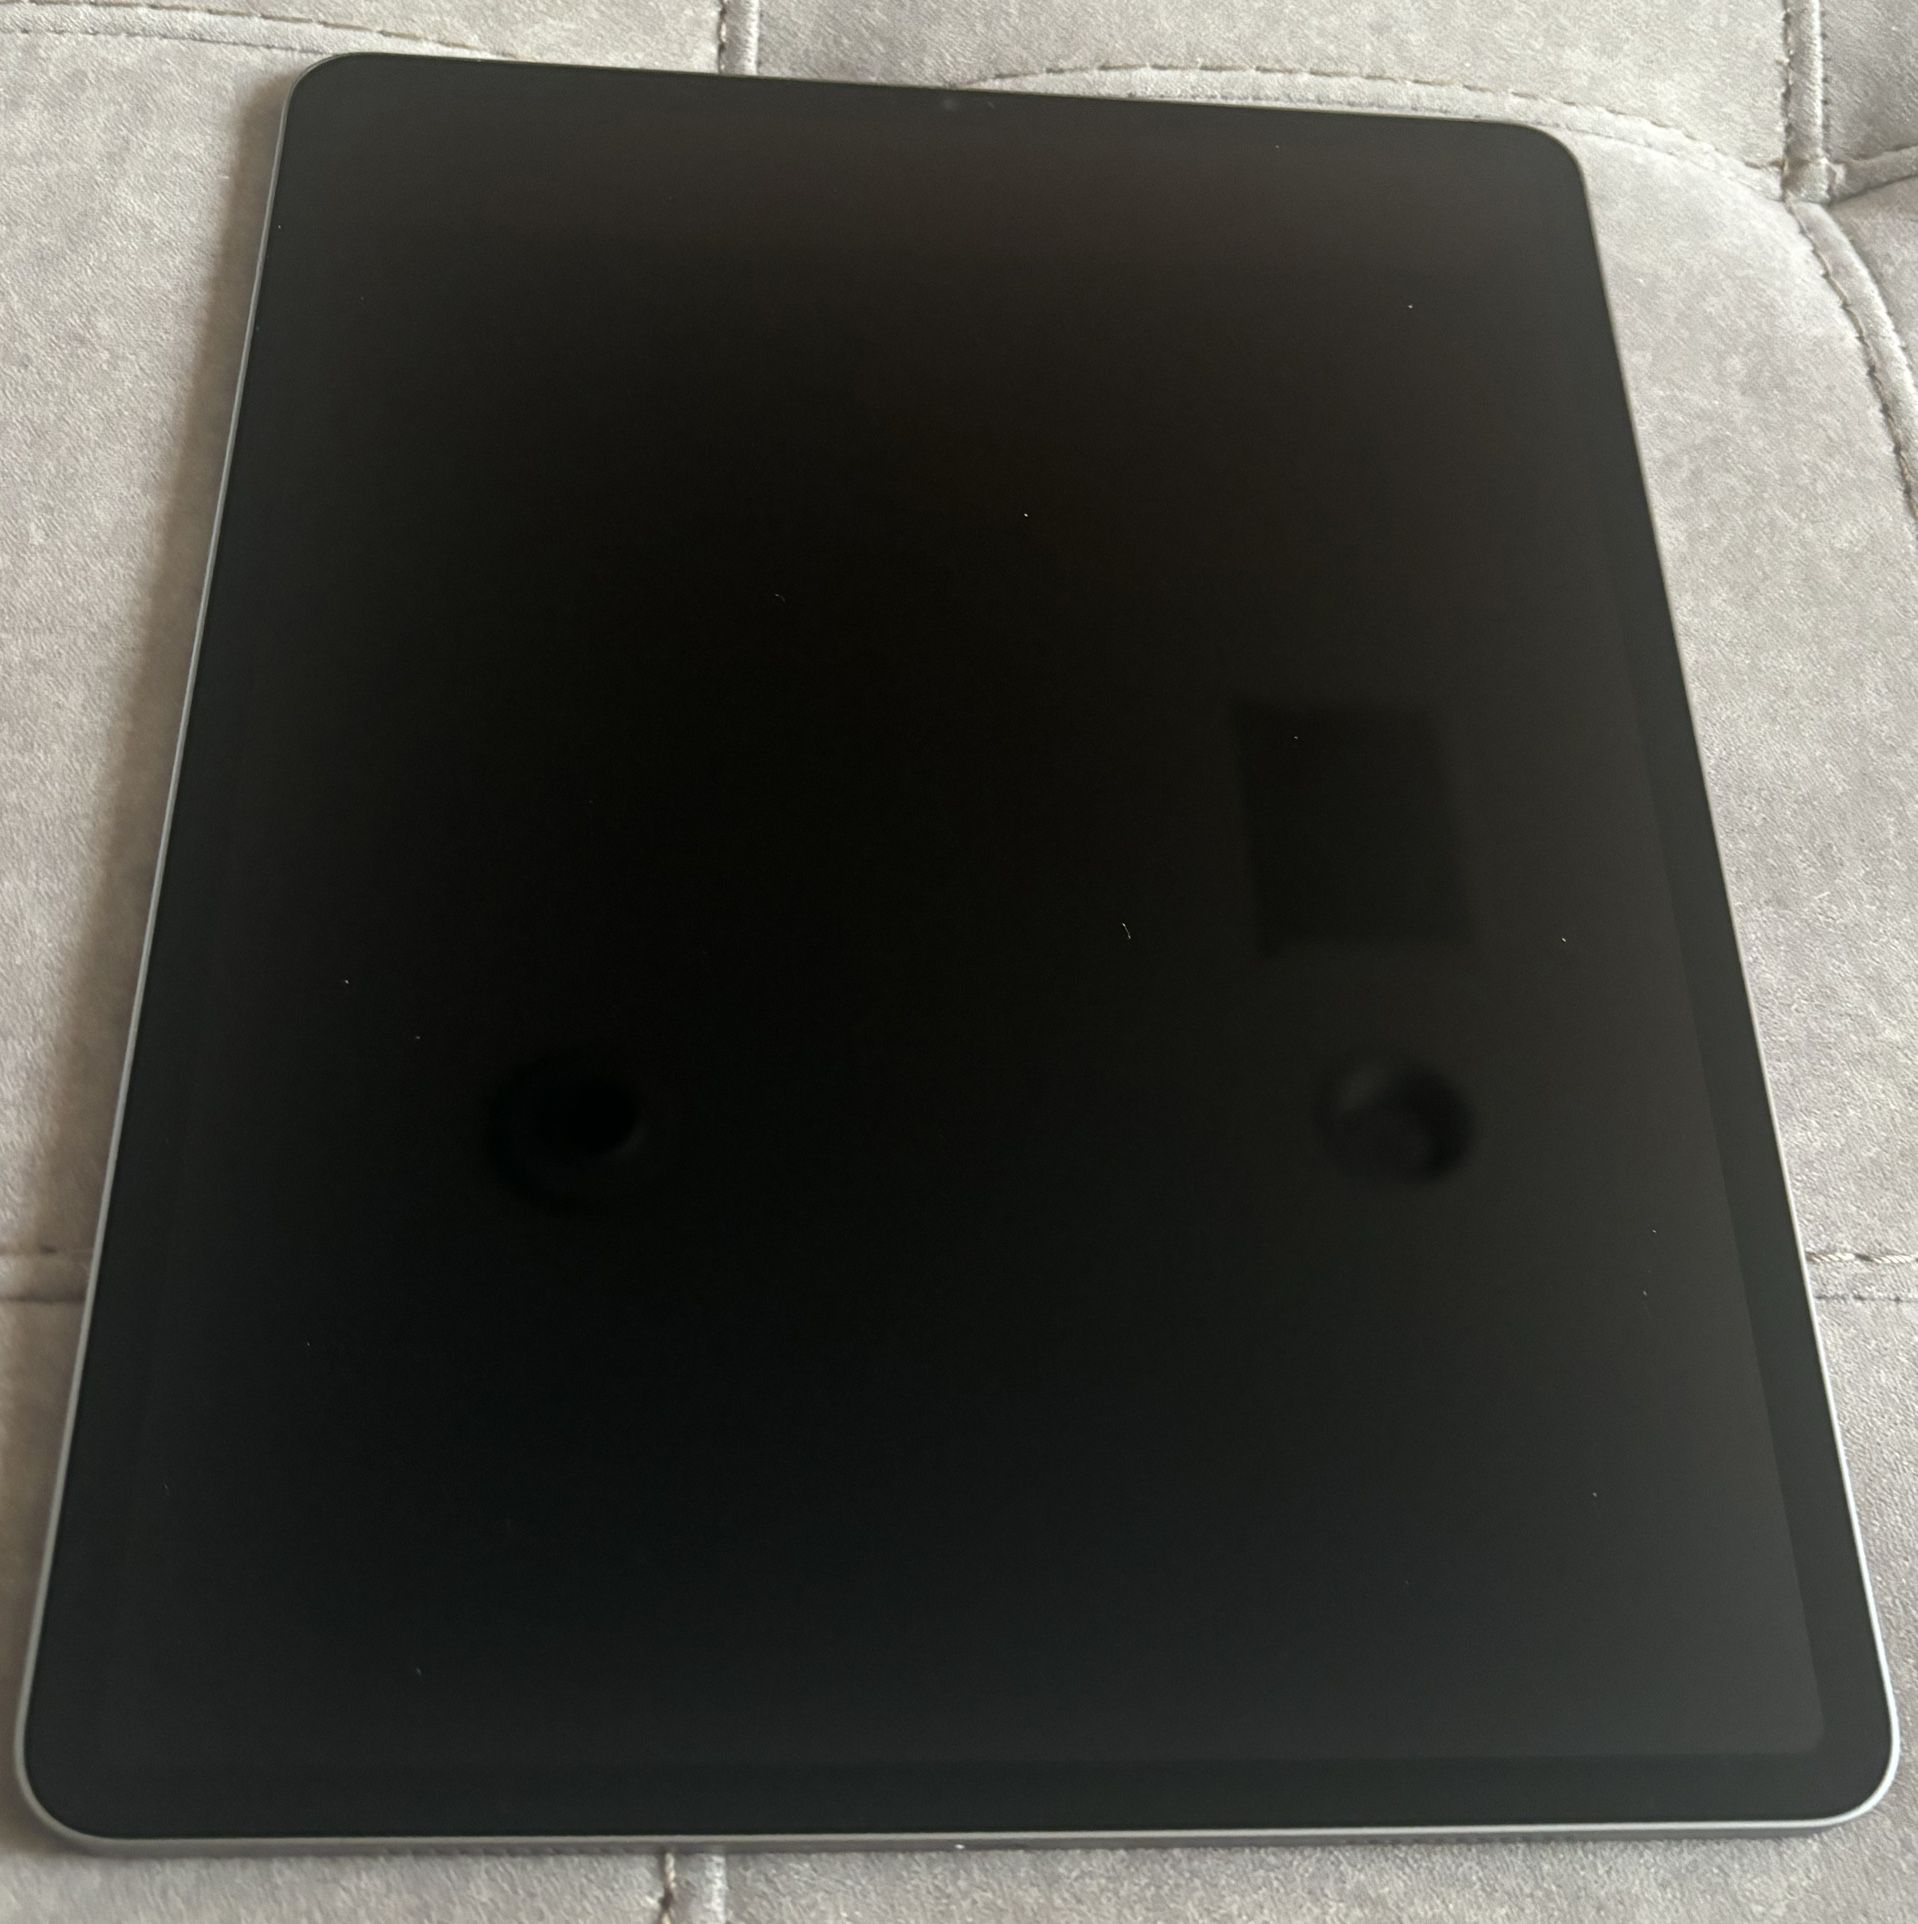 iPad Pro 12.9-inch 5th Generation